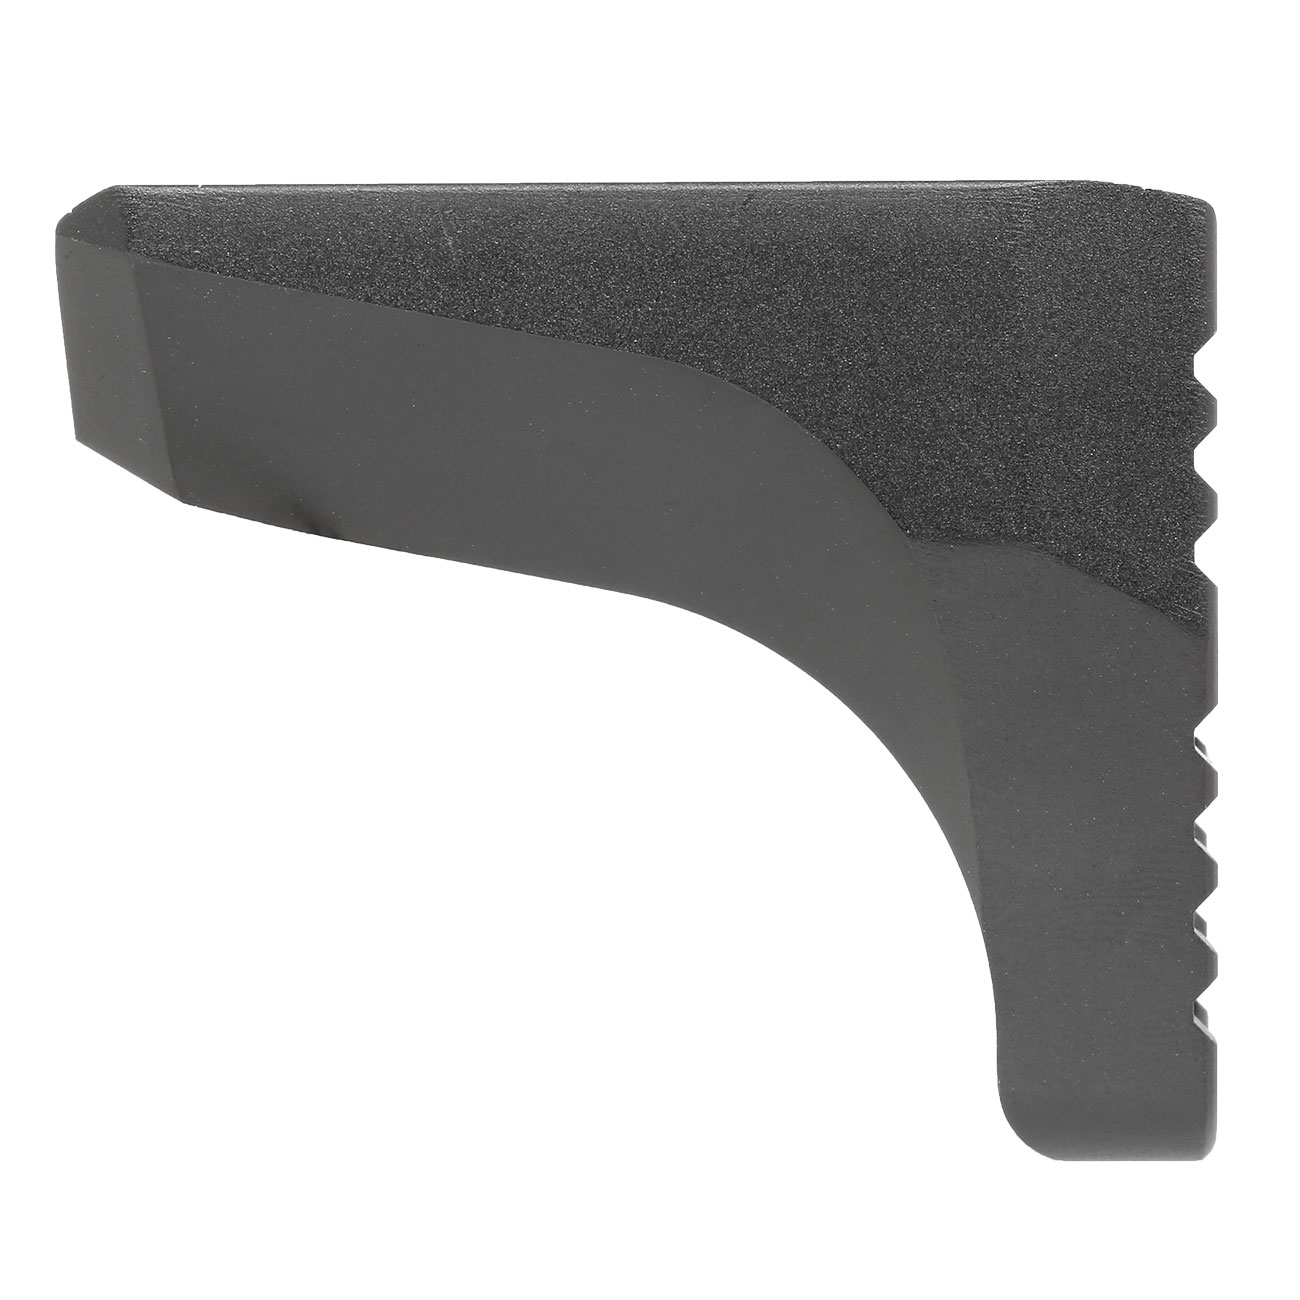 UTG KeyMod Super Slim Aluminium Handstop / Barricade Rest Kit schwarz Bild 3